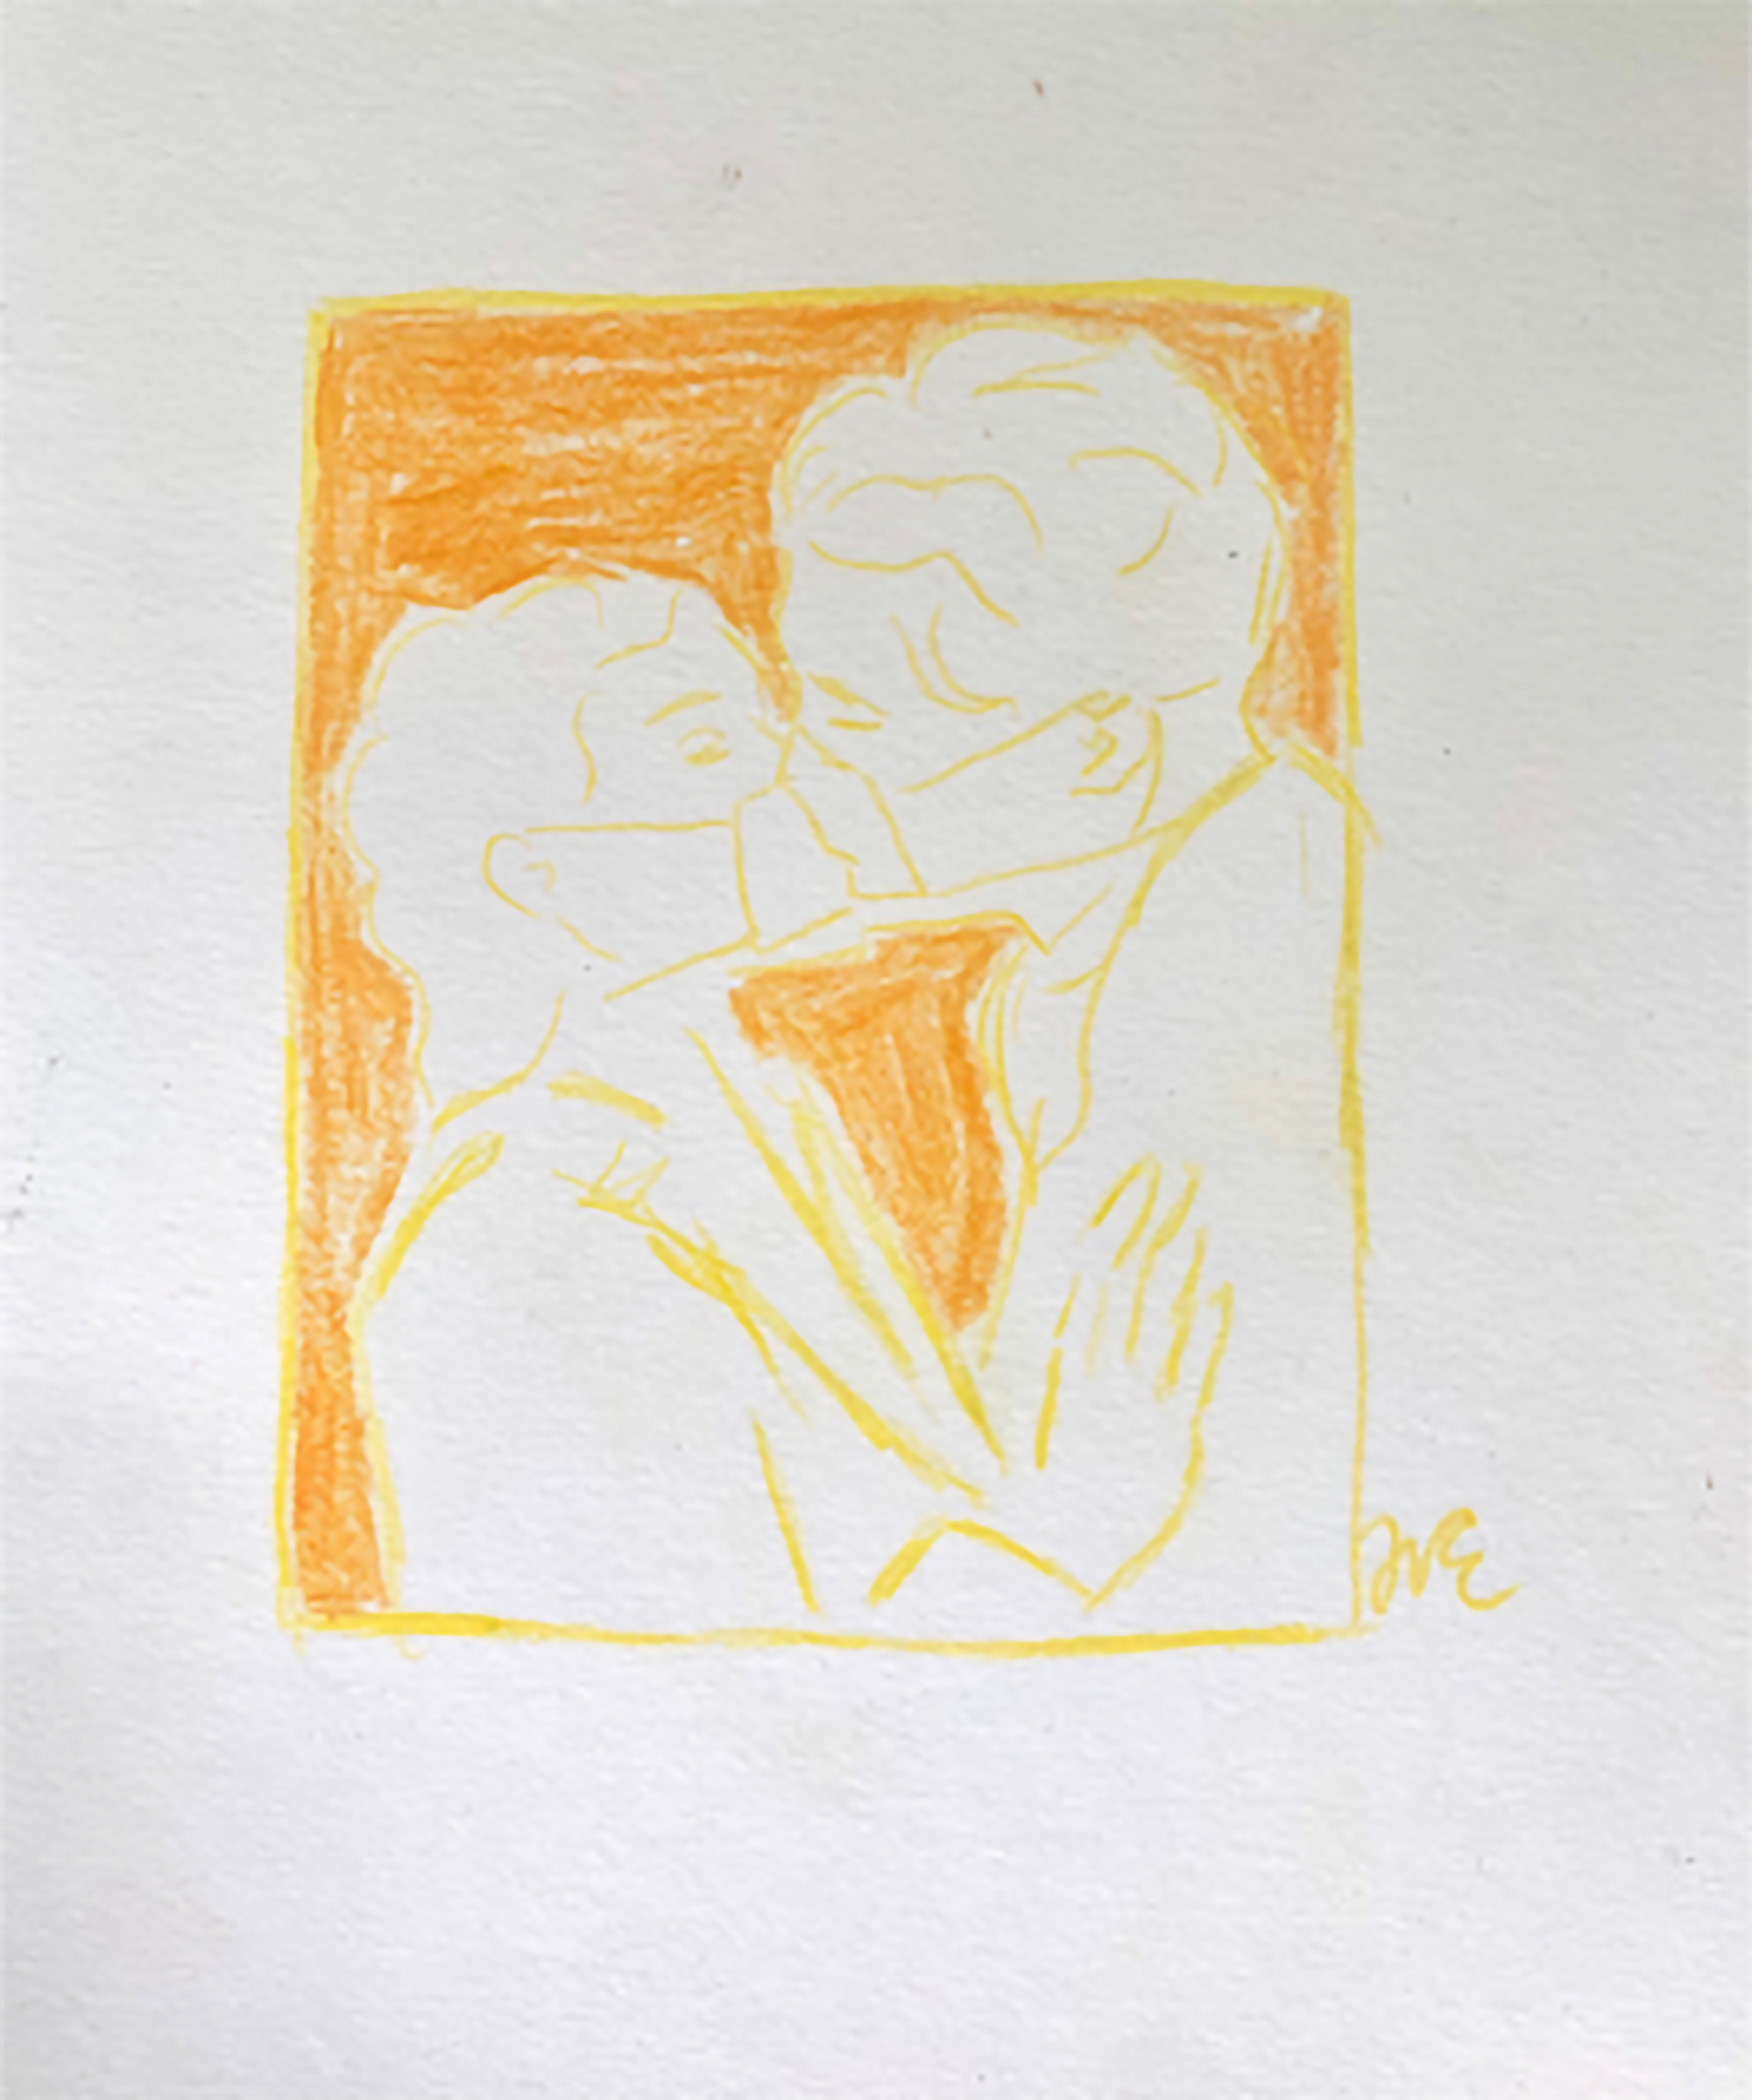 Josephina Elverfeldt: Kiss, Drawing, Unique and Original, Pastel on Paper, 22 cm x 20 cm, Canstein, 2020, © Josephina Elverfeldt.